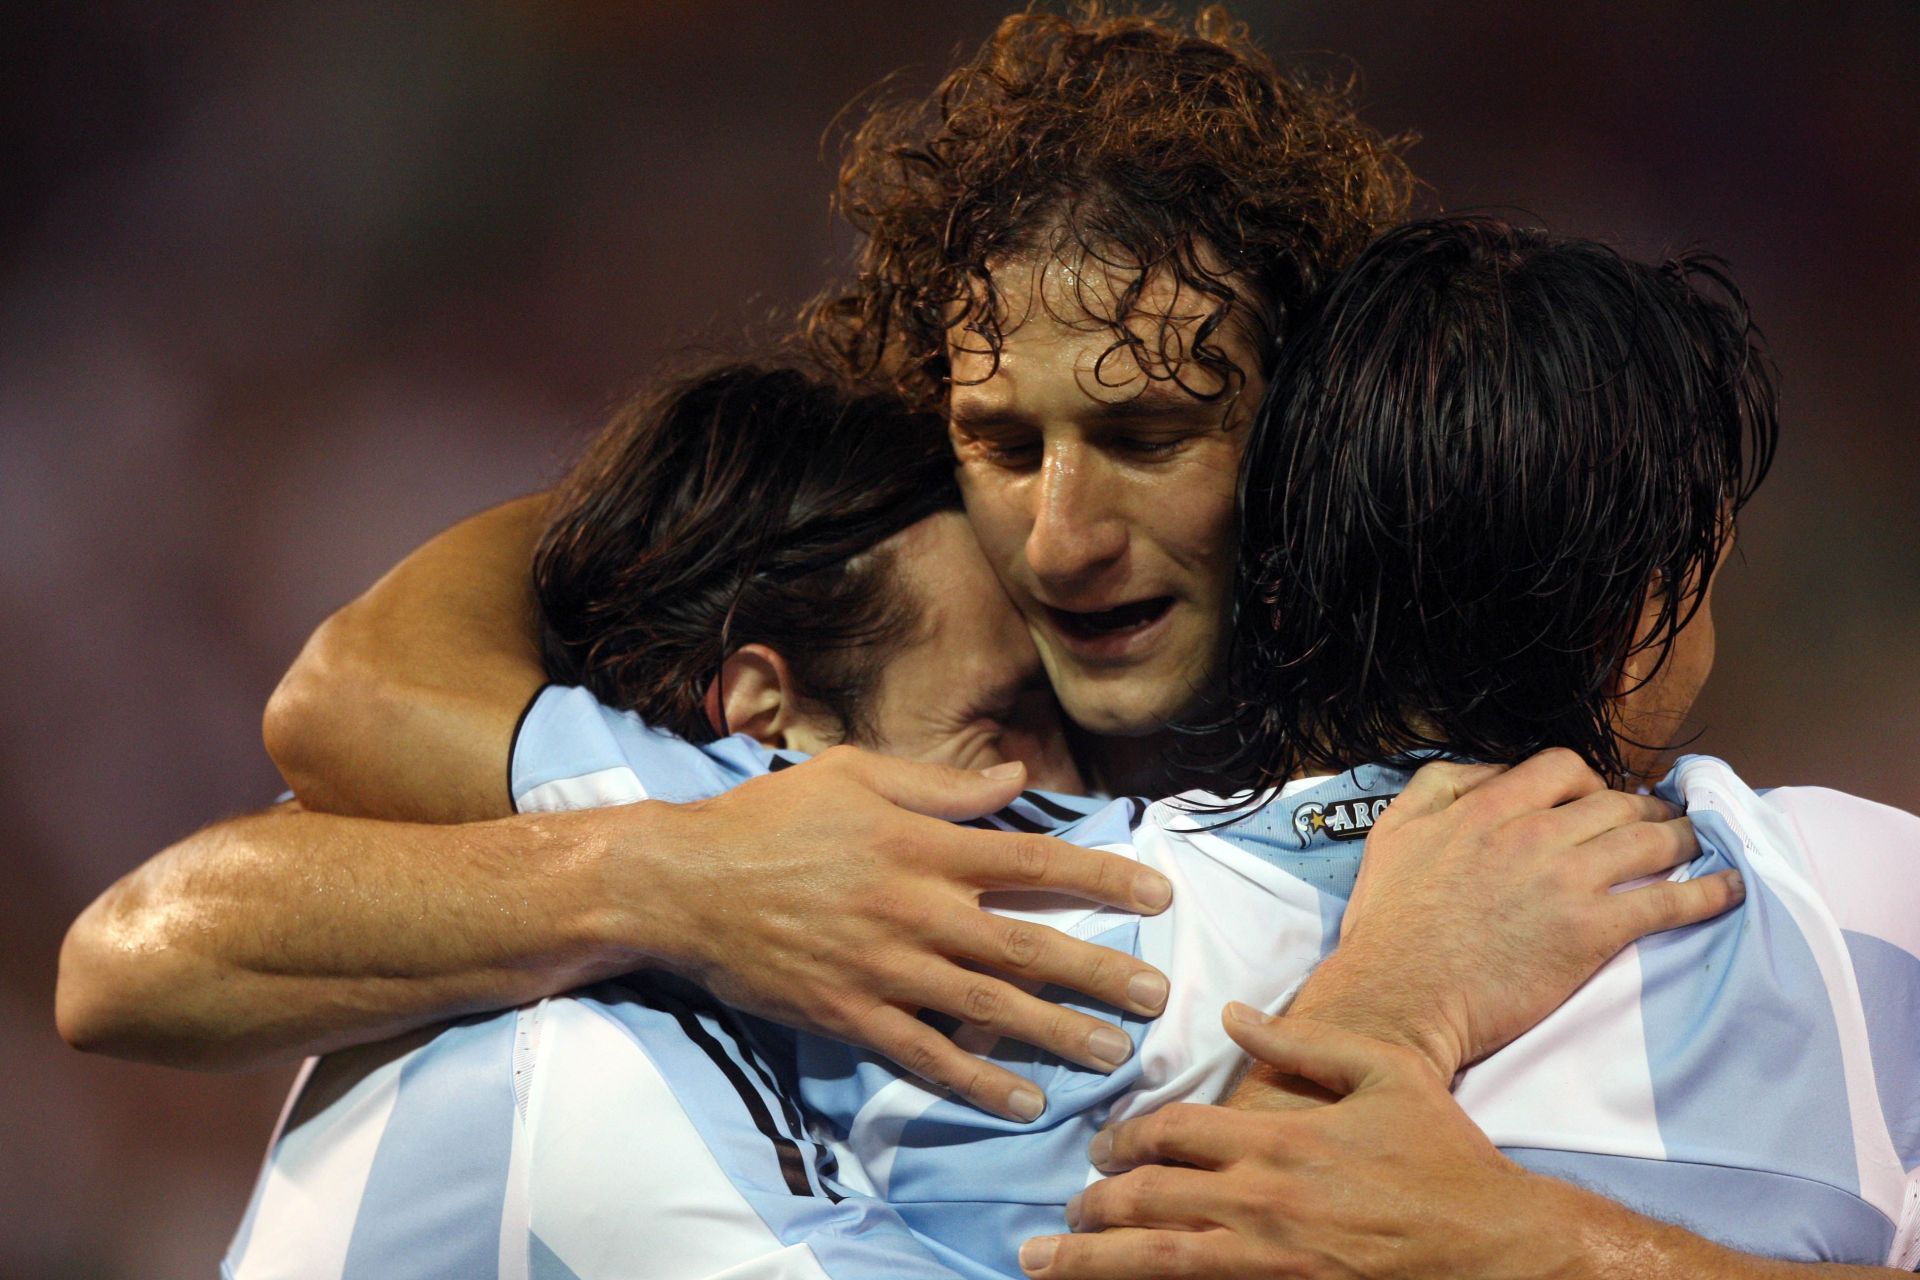 Lionel Messi embraces Fabricio Coloccini after scoring for Argentina